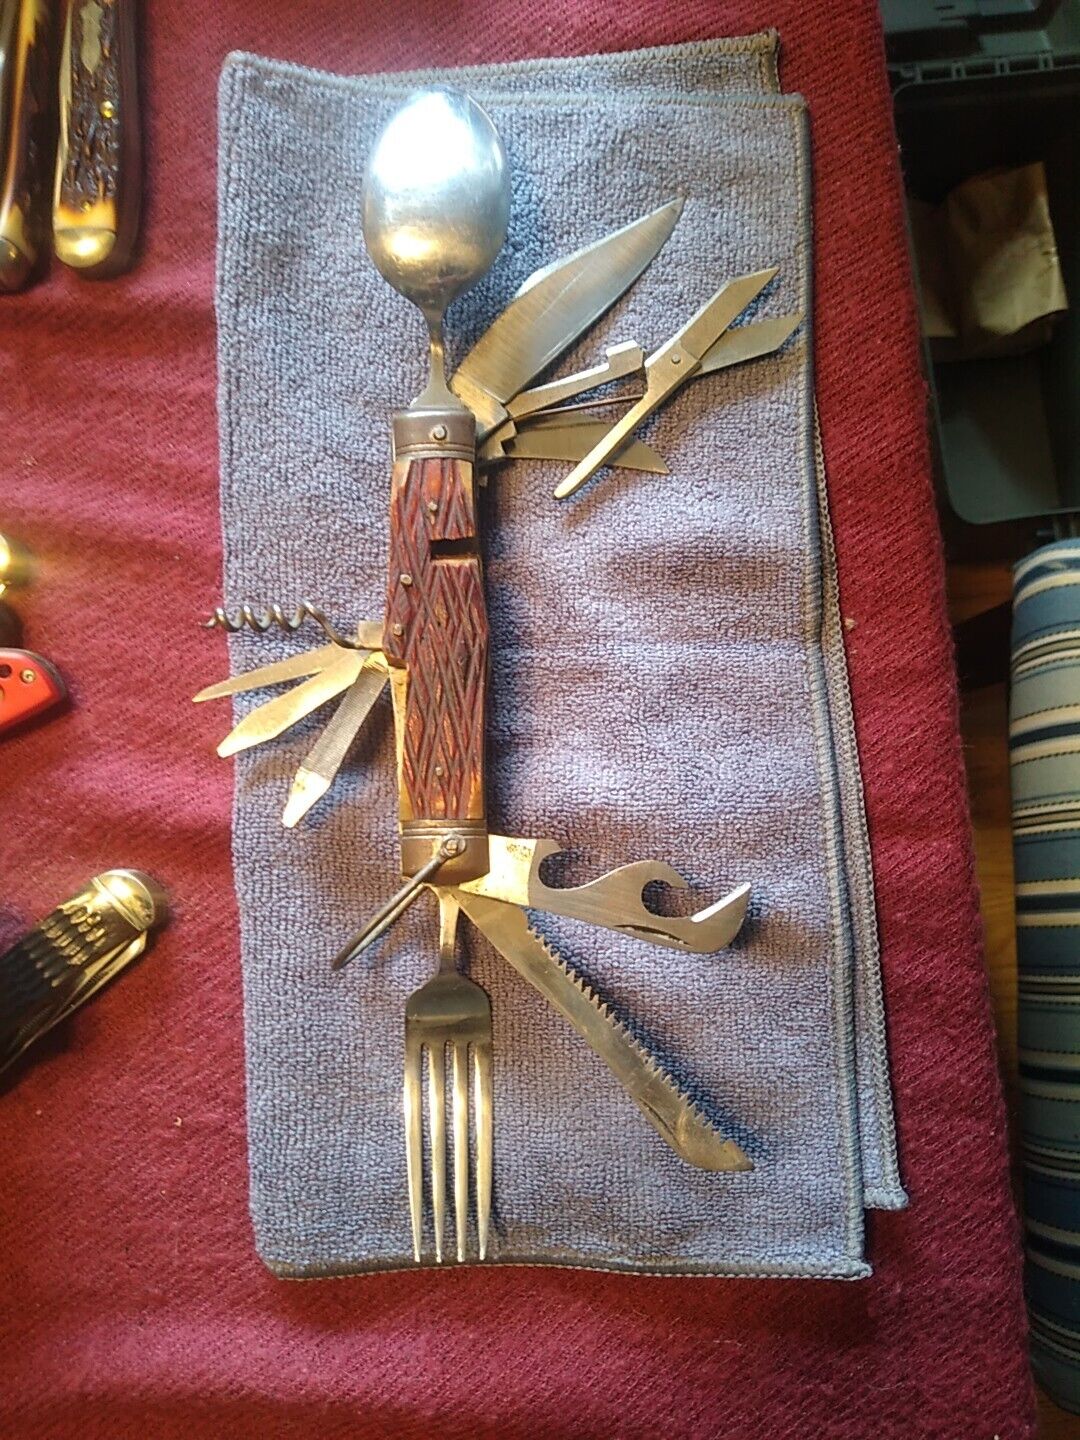 Vintage, Boy Scout, Hobo, Camping, Pocket Knife W/ Case, Spoon Fork - 1960's